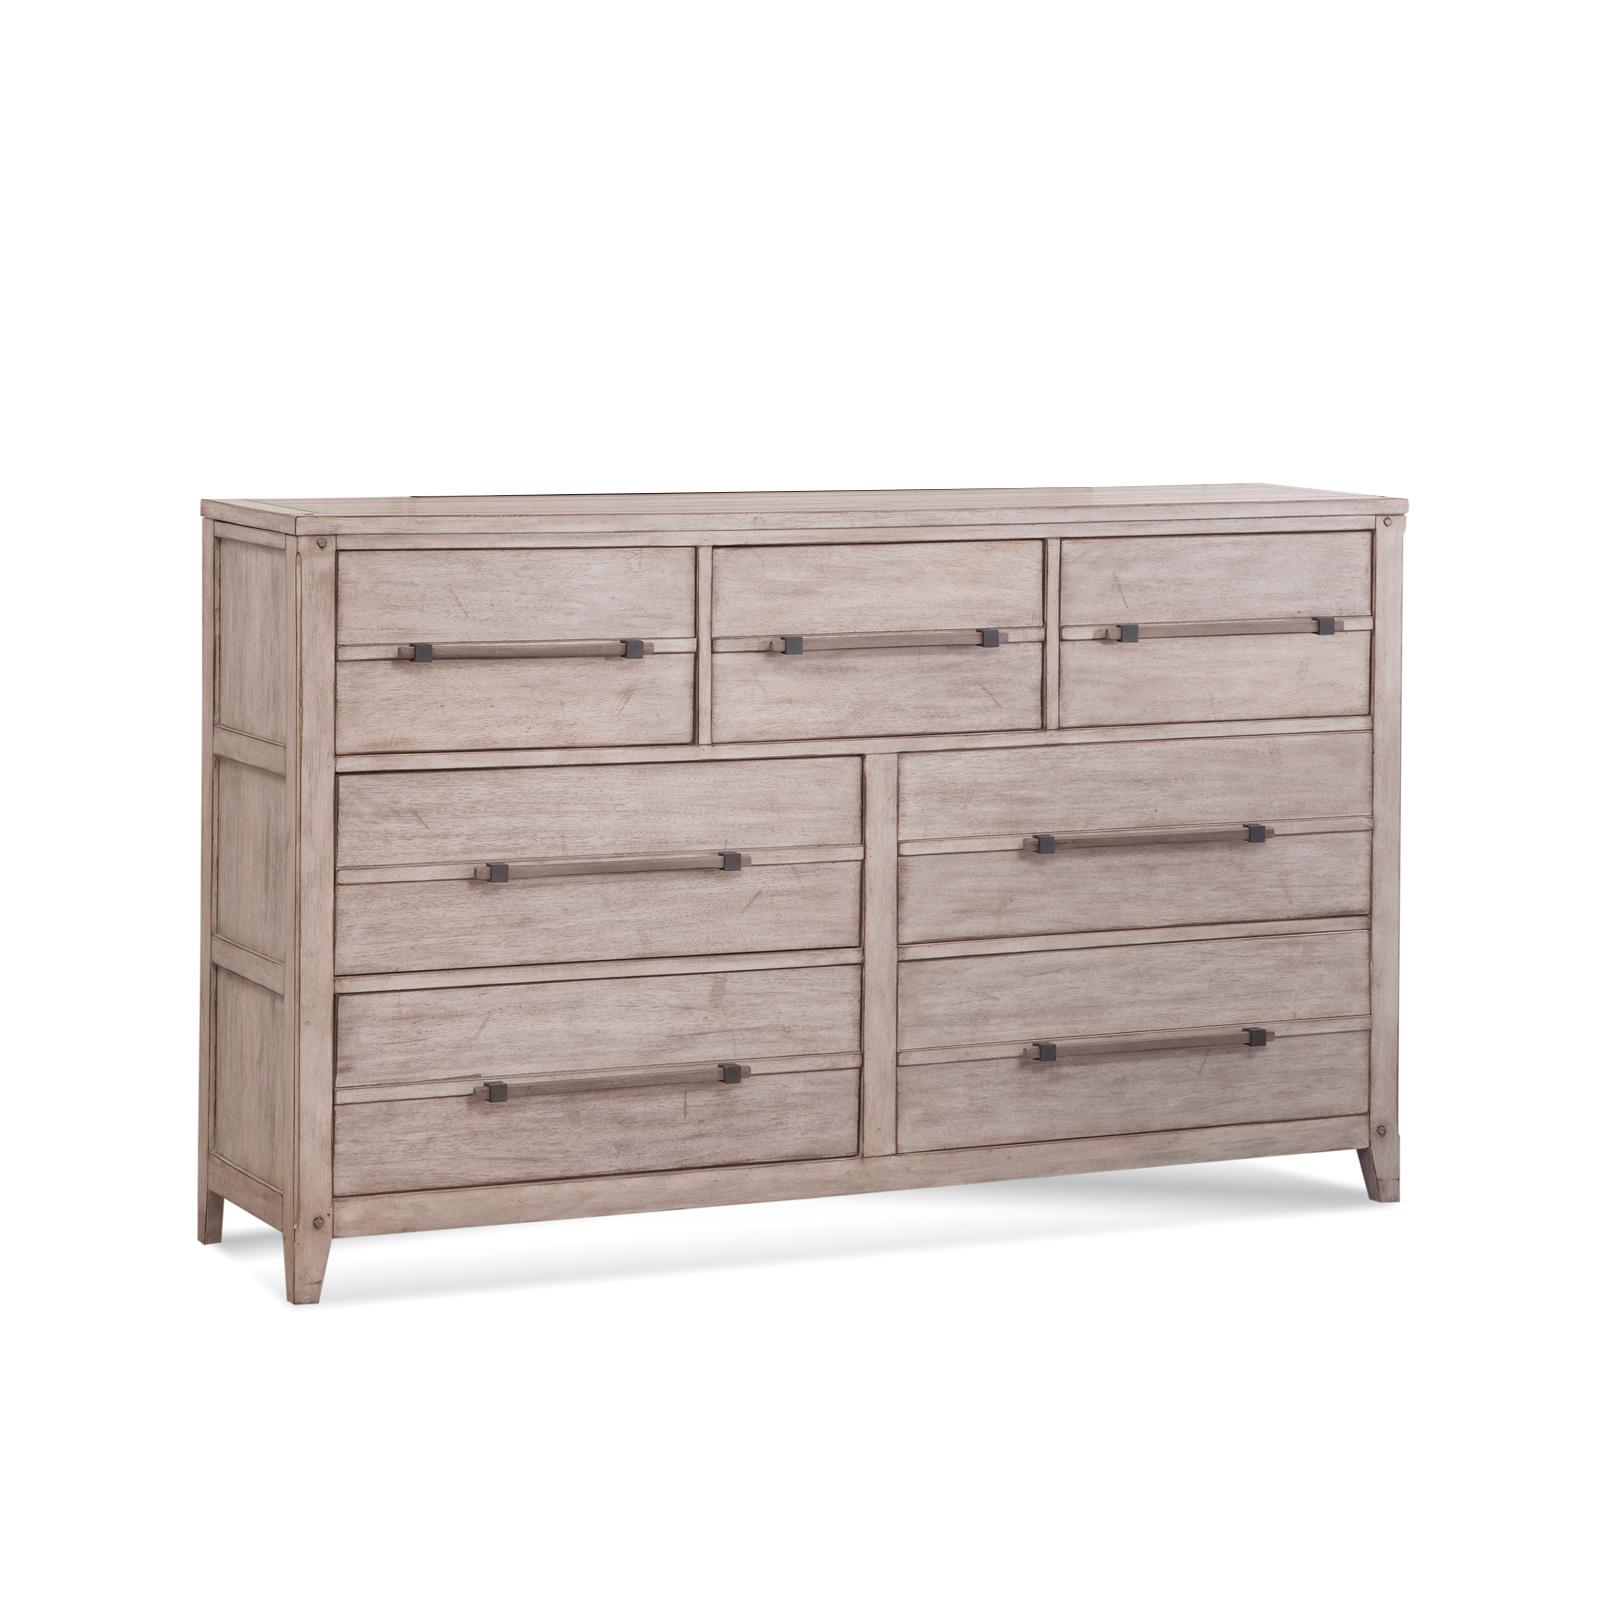 Classic, Traditional Dresser AURORA 2810-270 2810-270 in whitewash 